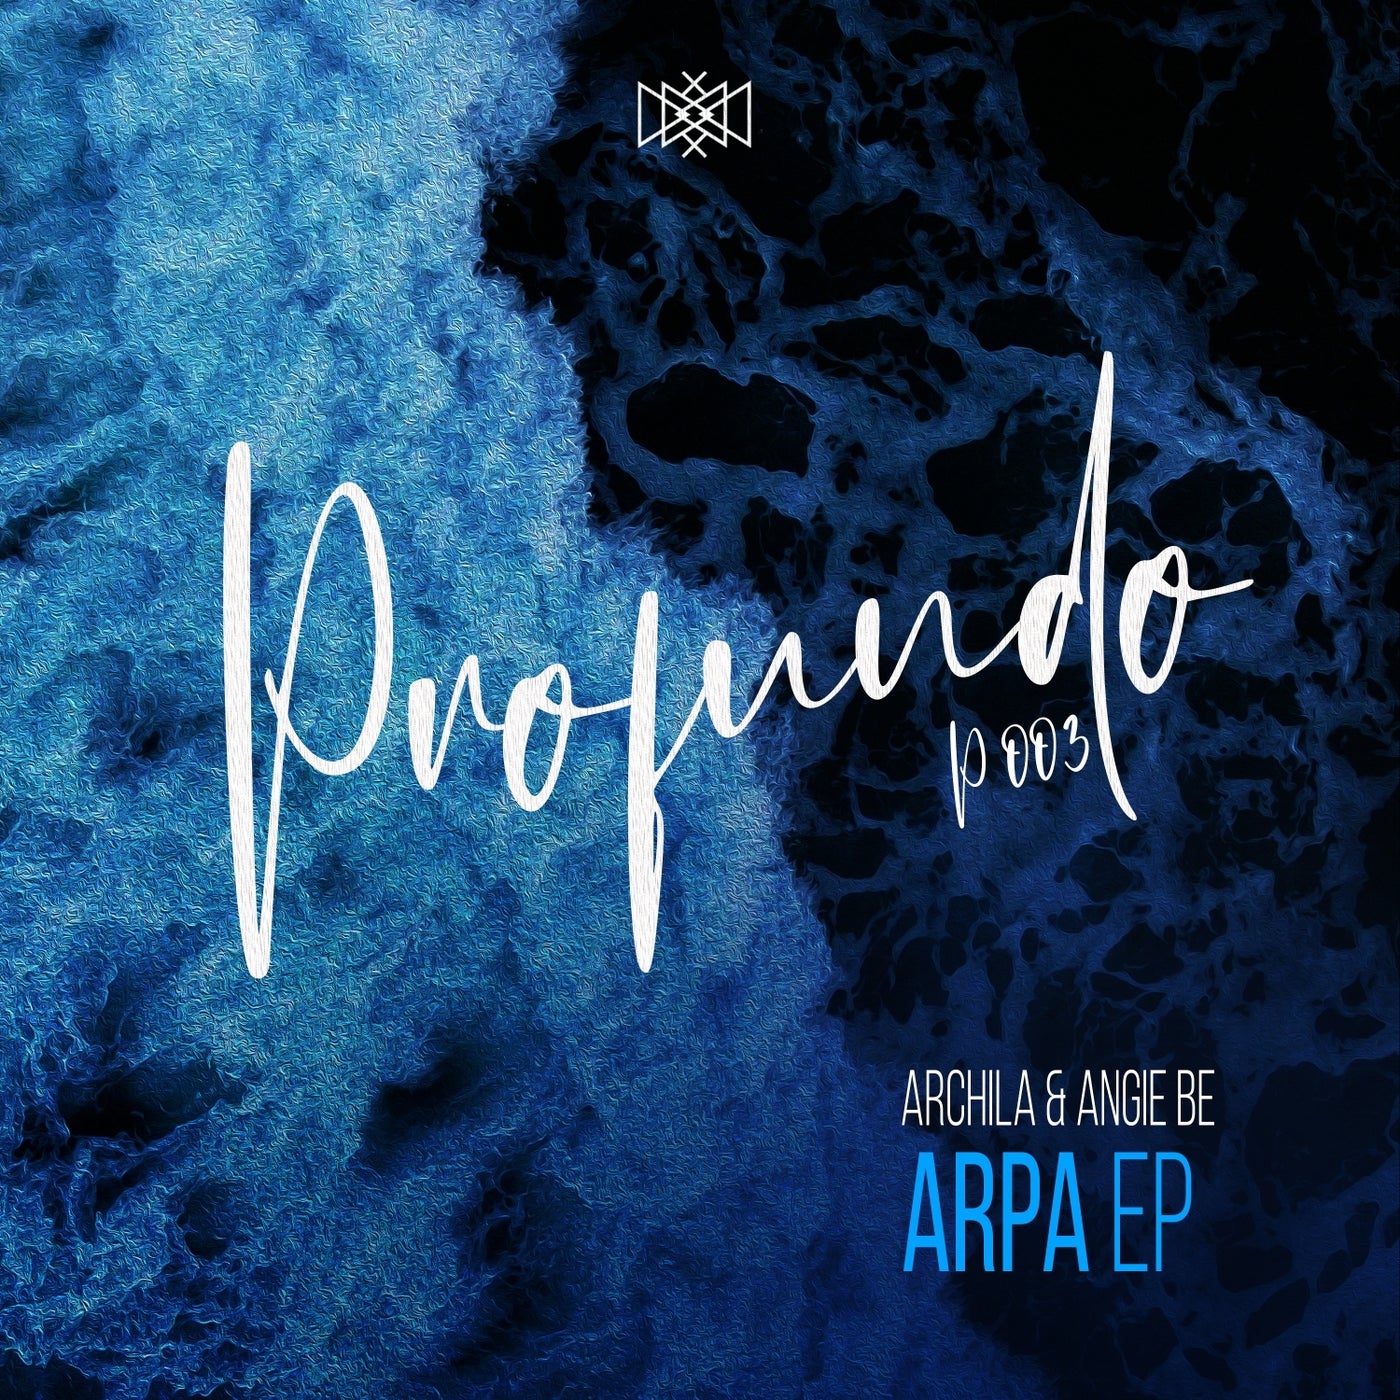 Archila – Arpa [P003]